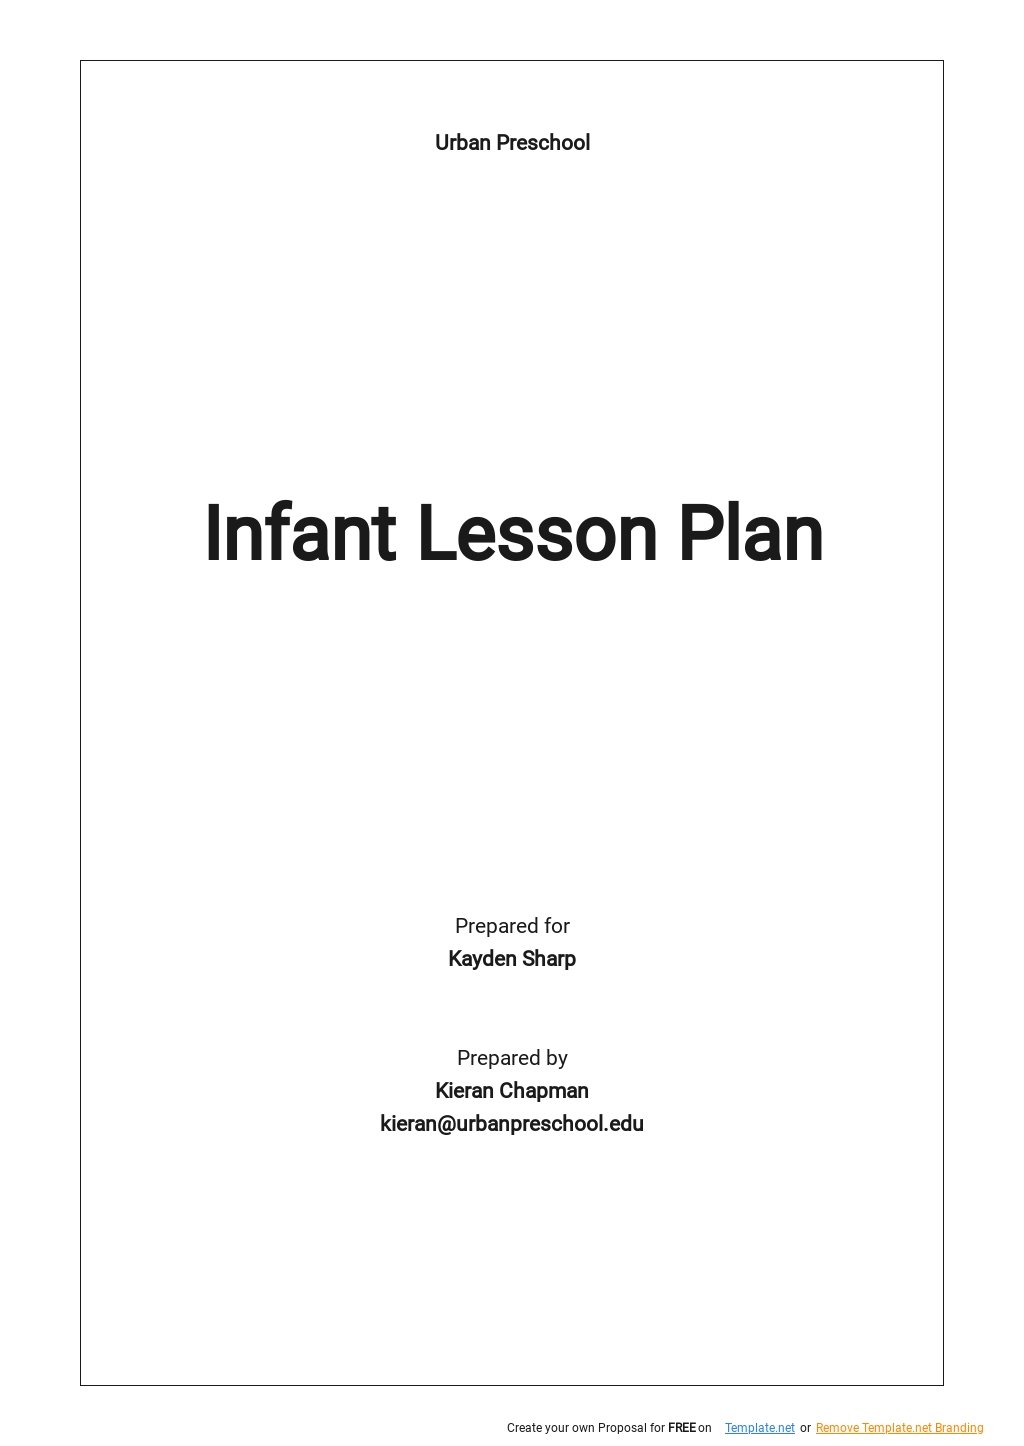 blank-infant-lesson-plan-template-cakepins-com-classroom-ideas-lesson